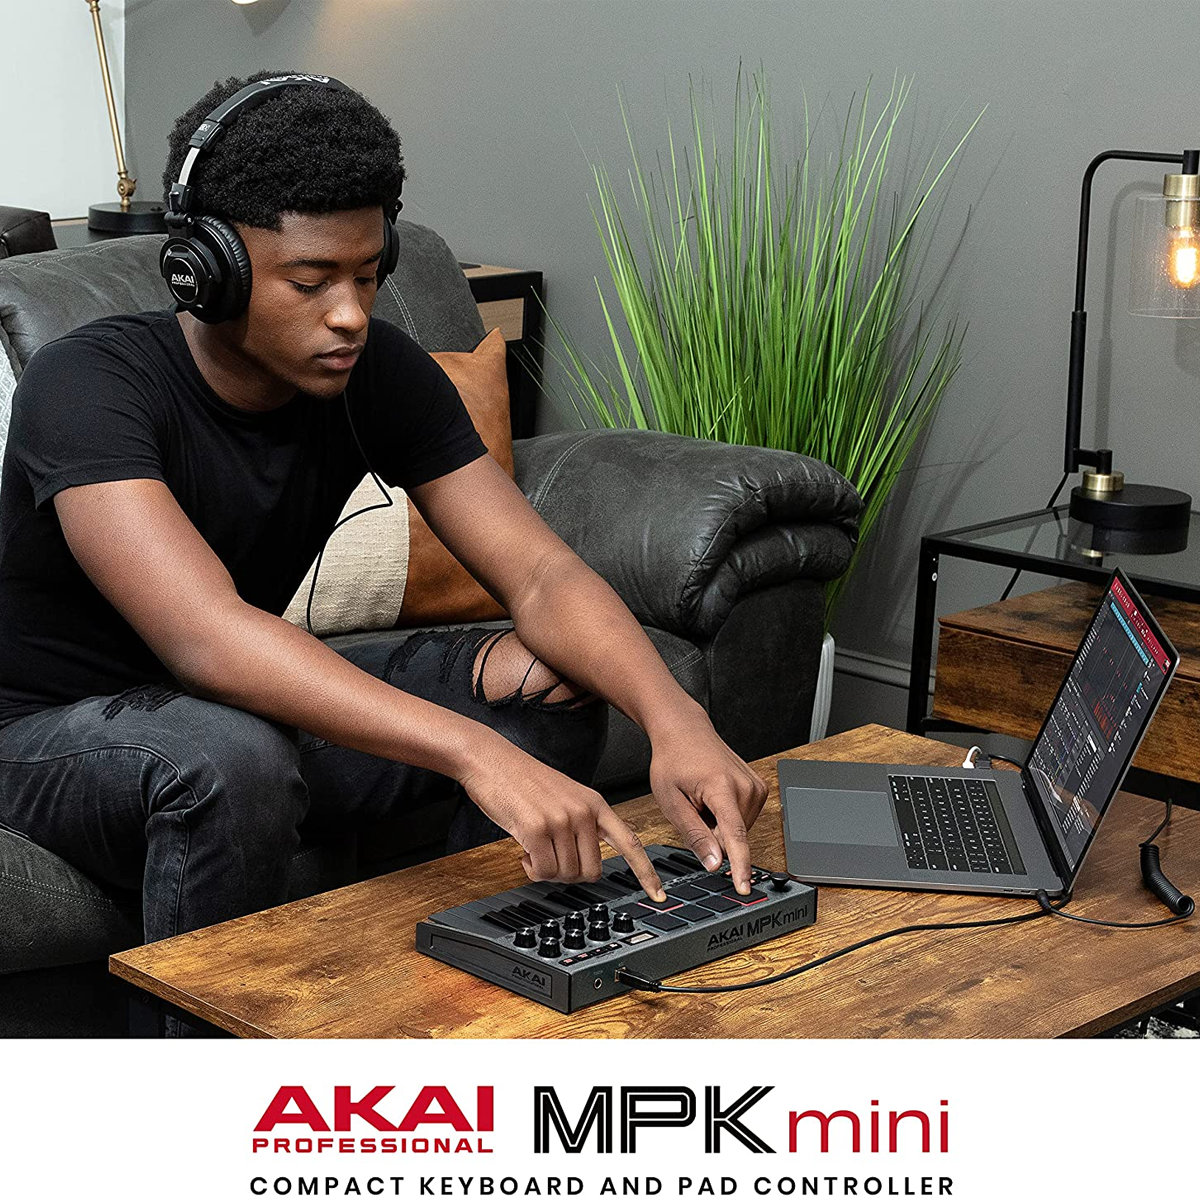 Akai MPK Mini MK3 Keyboard Controller with Case